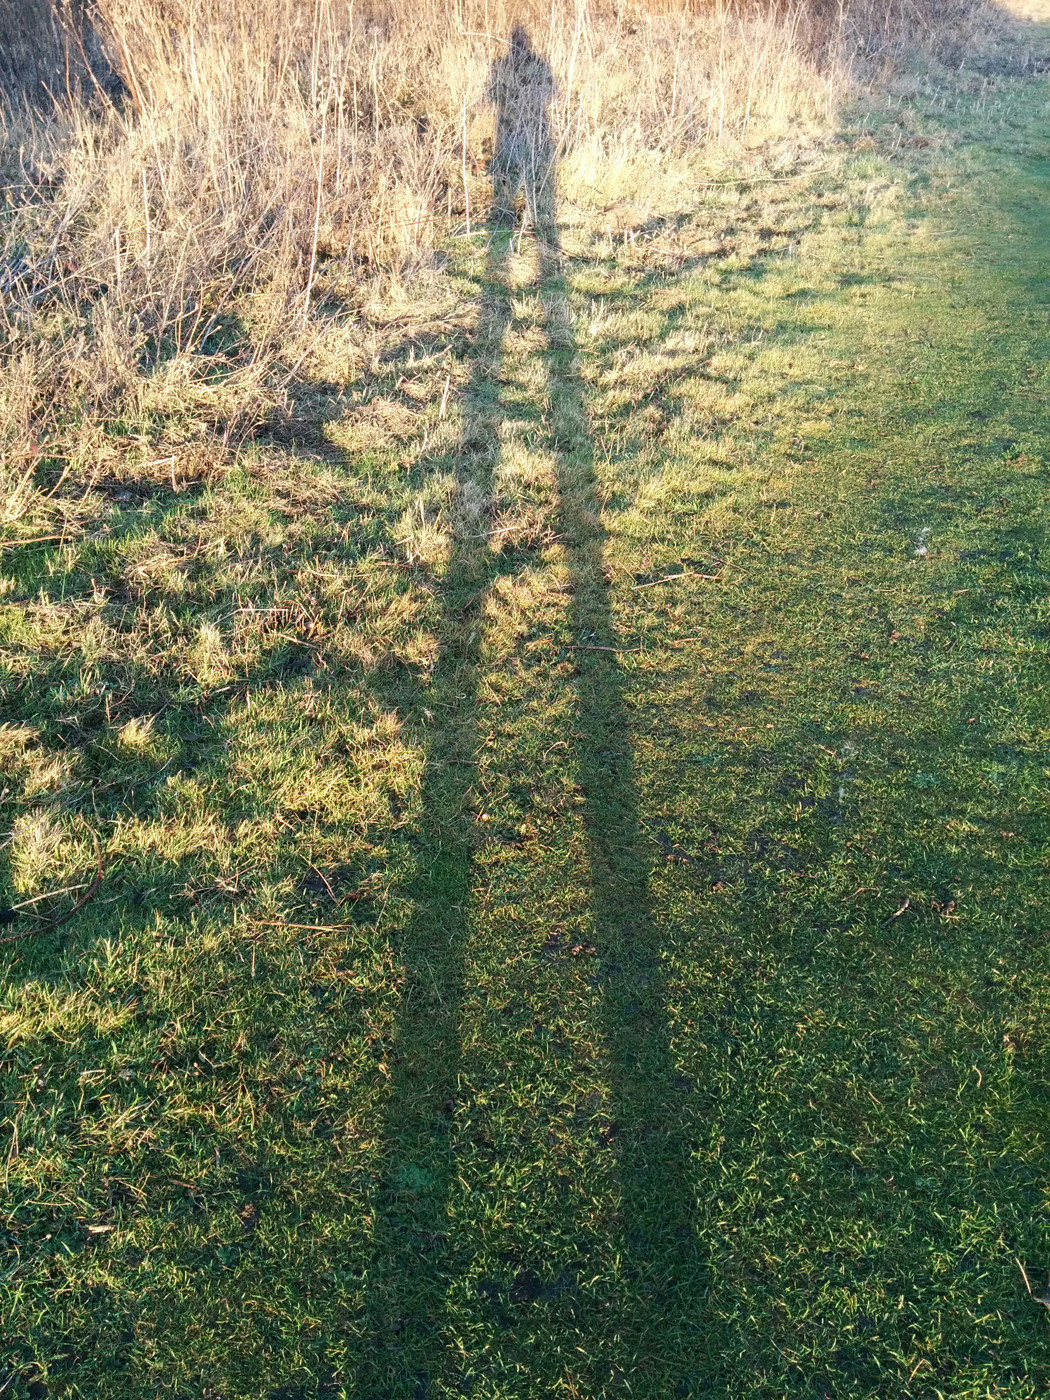 Giant shadow